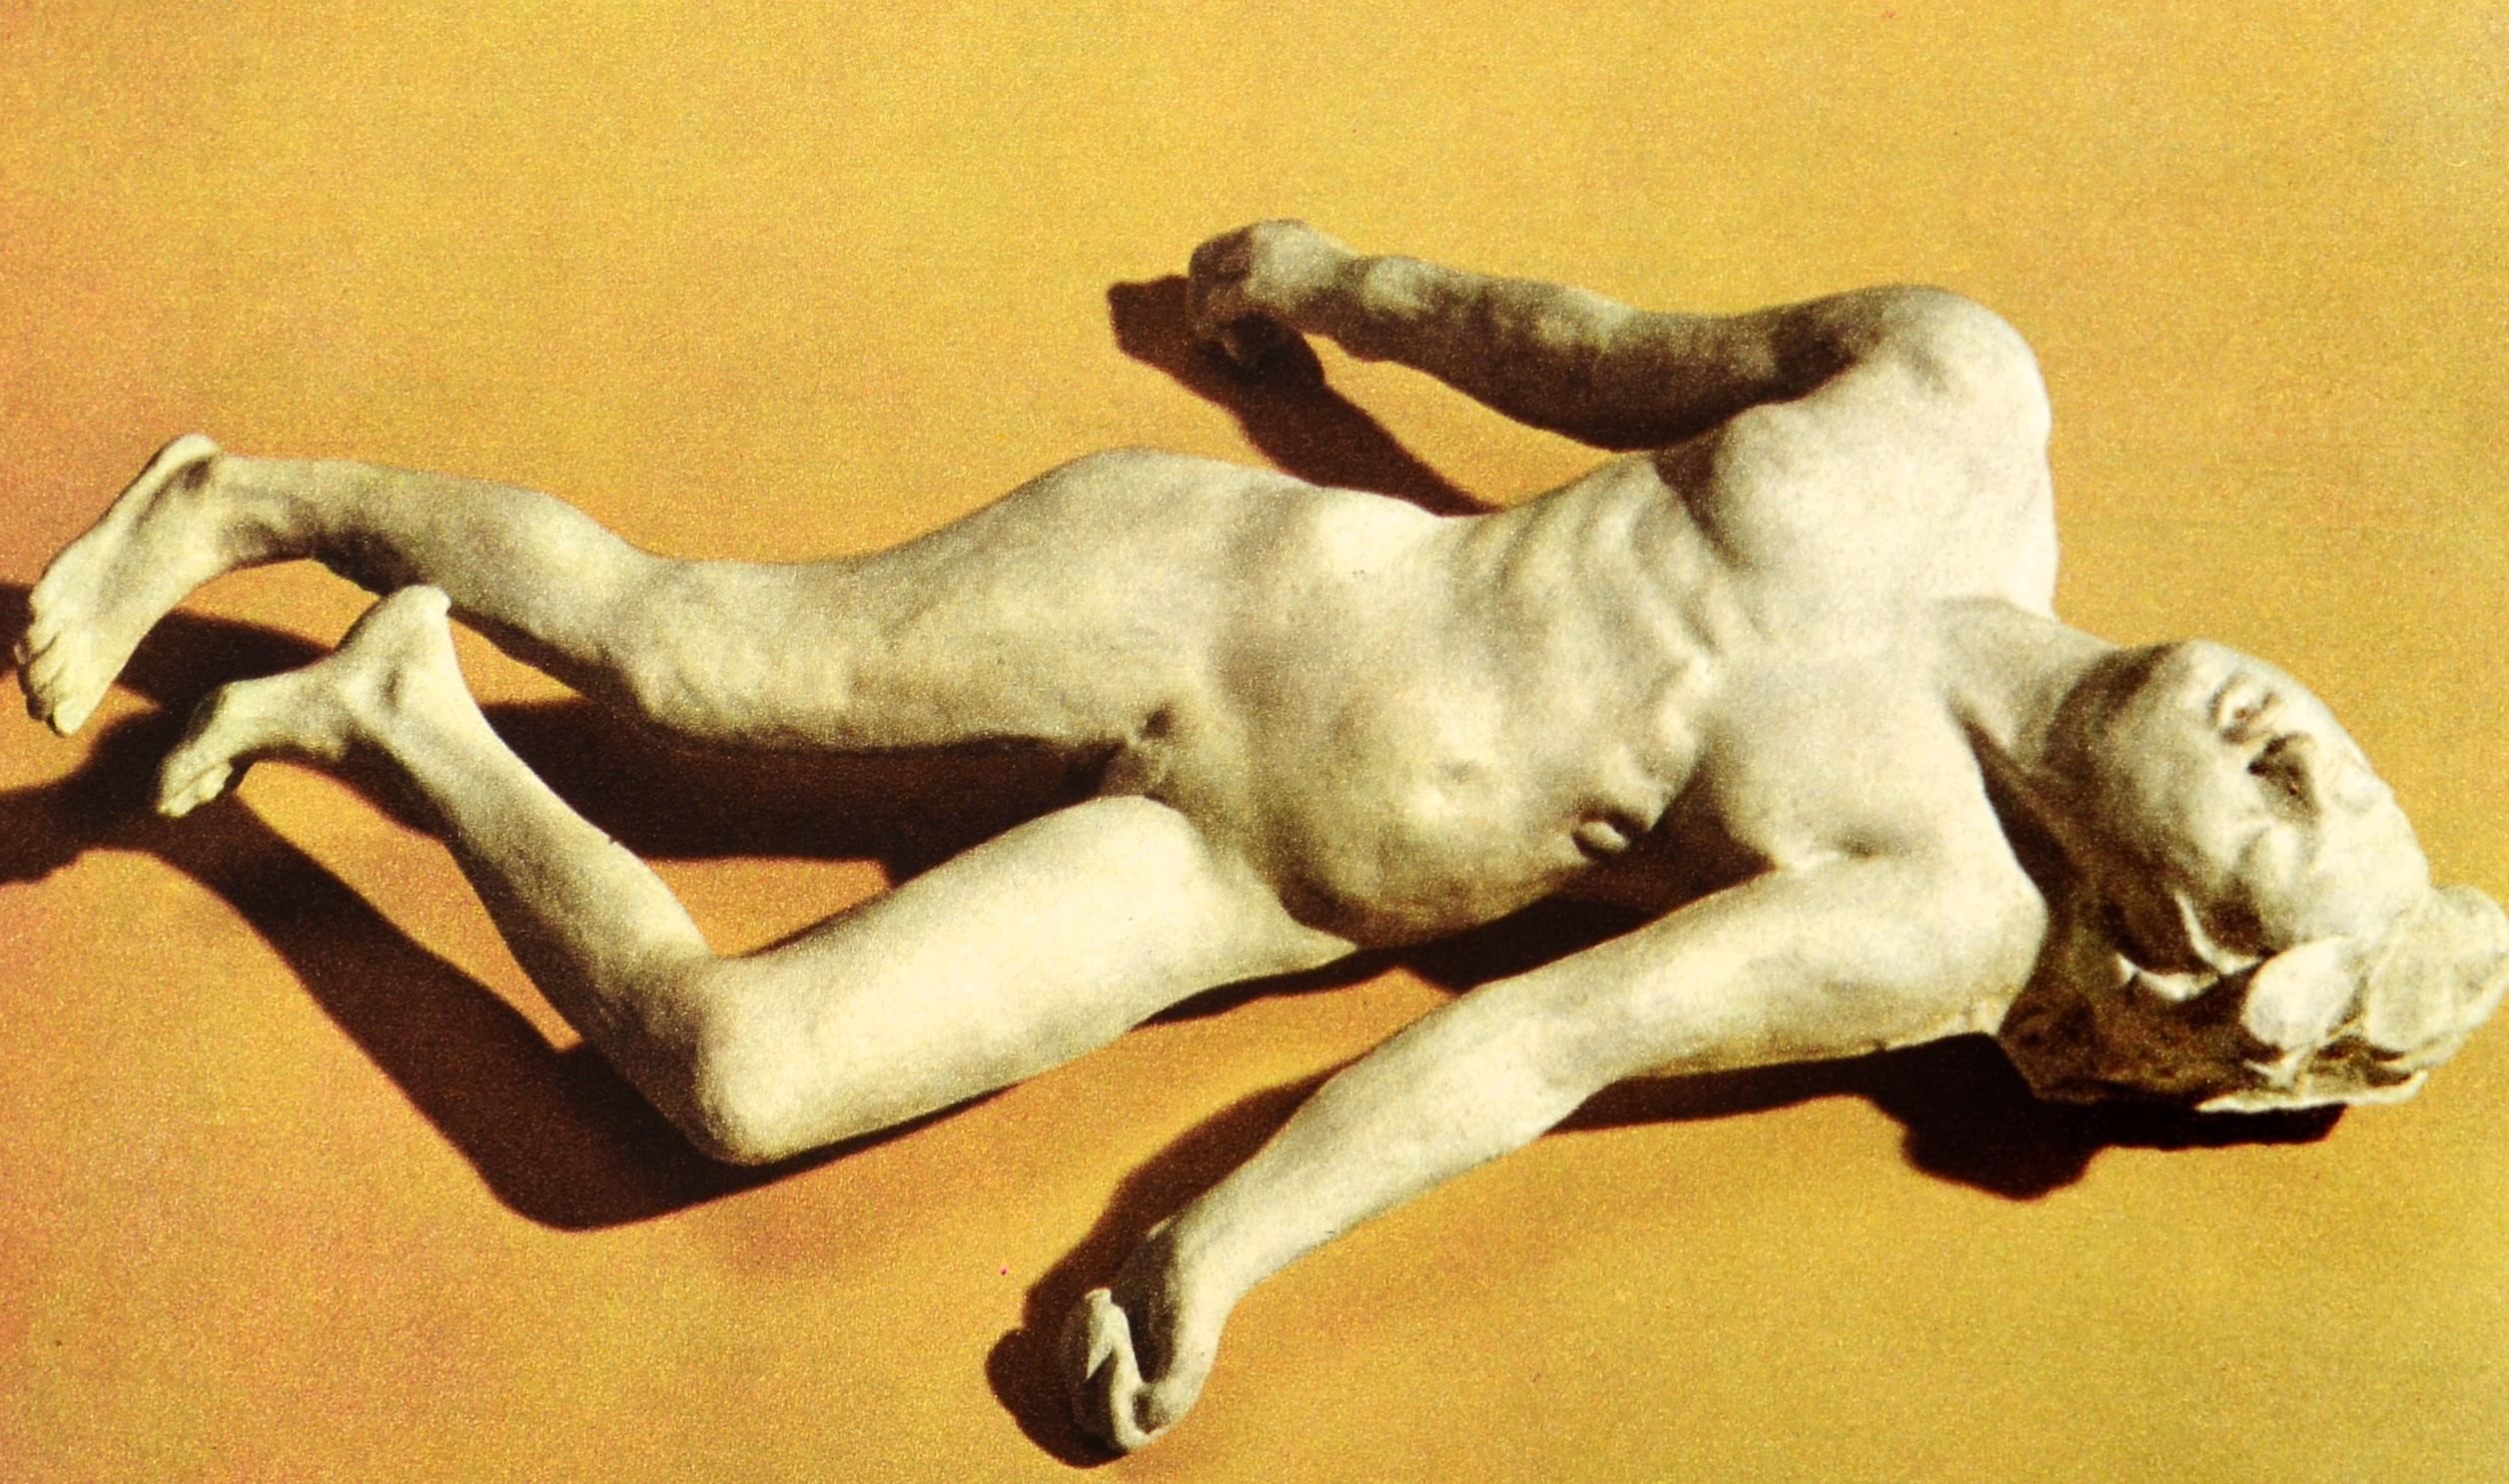 Rodin by Robert Descharnes and Jean-François Chabrun, First Edition 10